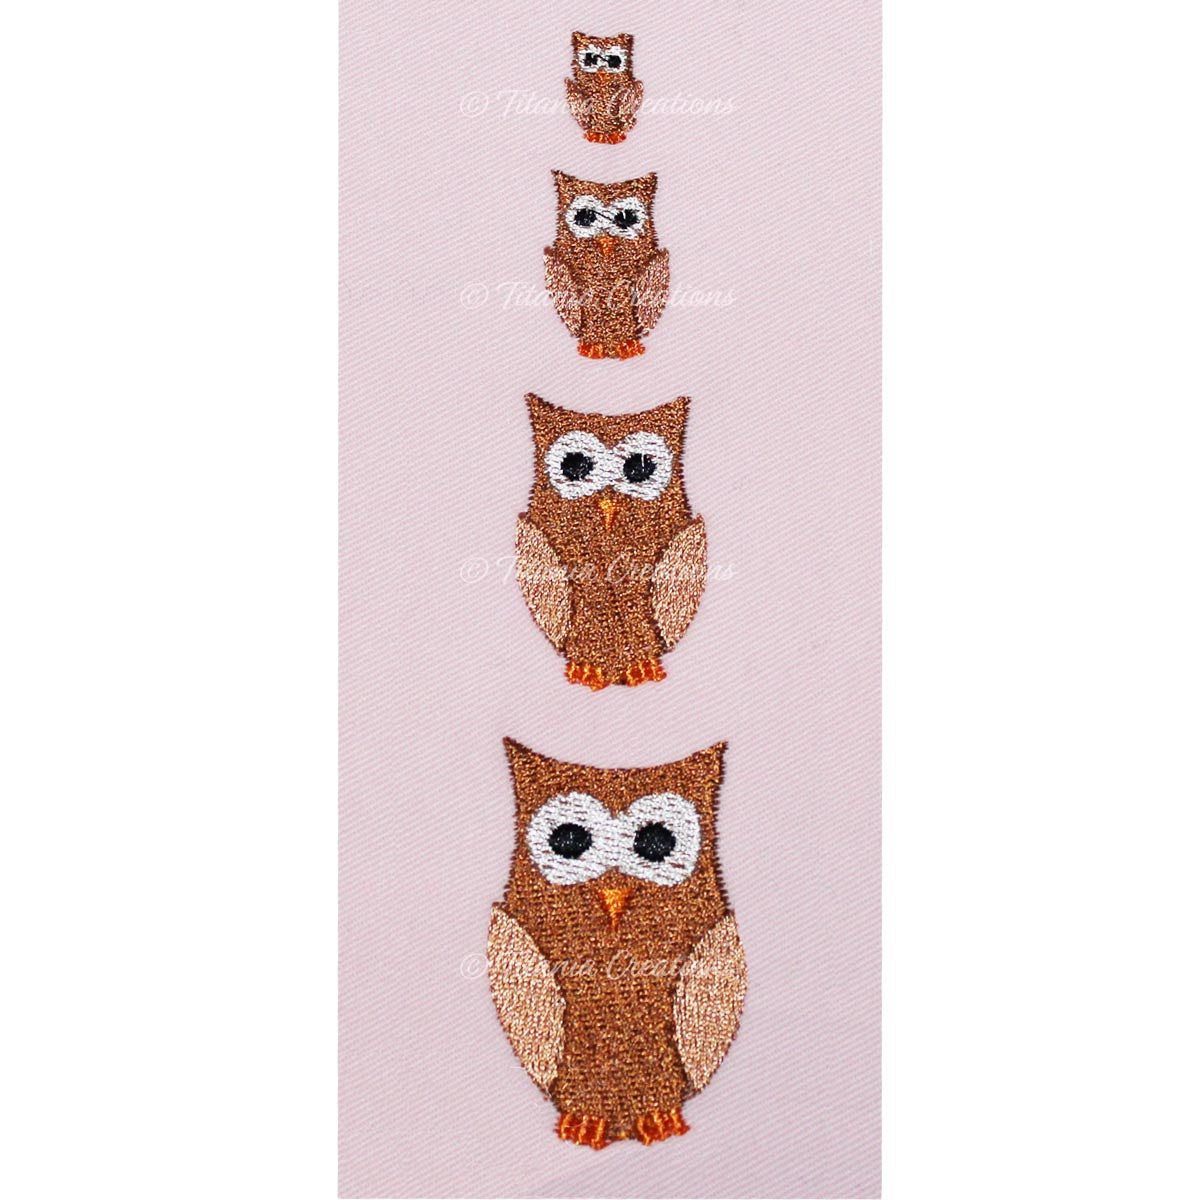 Miniature Owl Set of Four 4x4